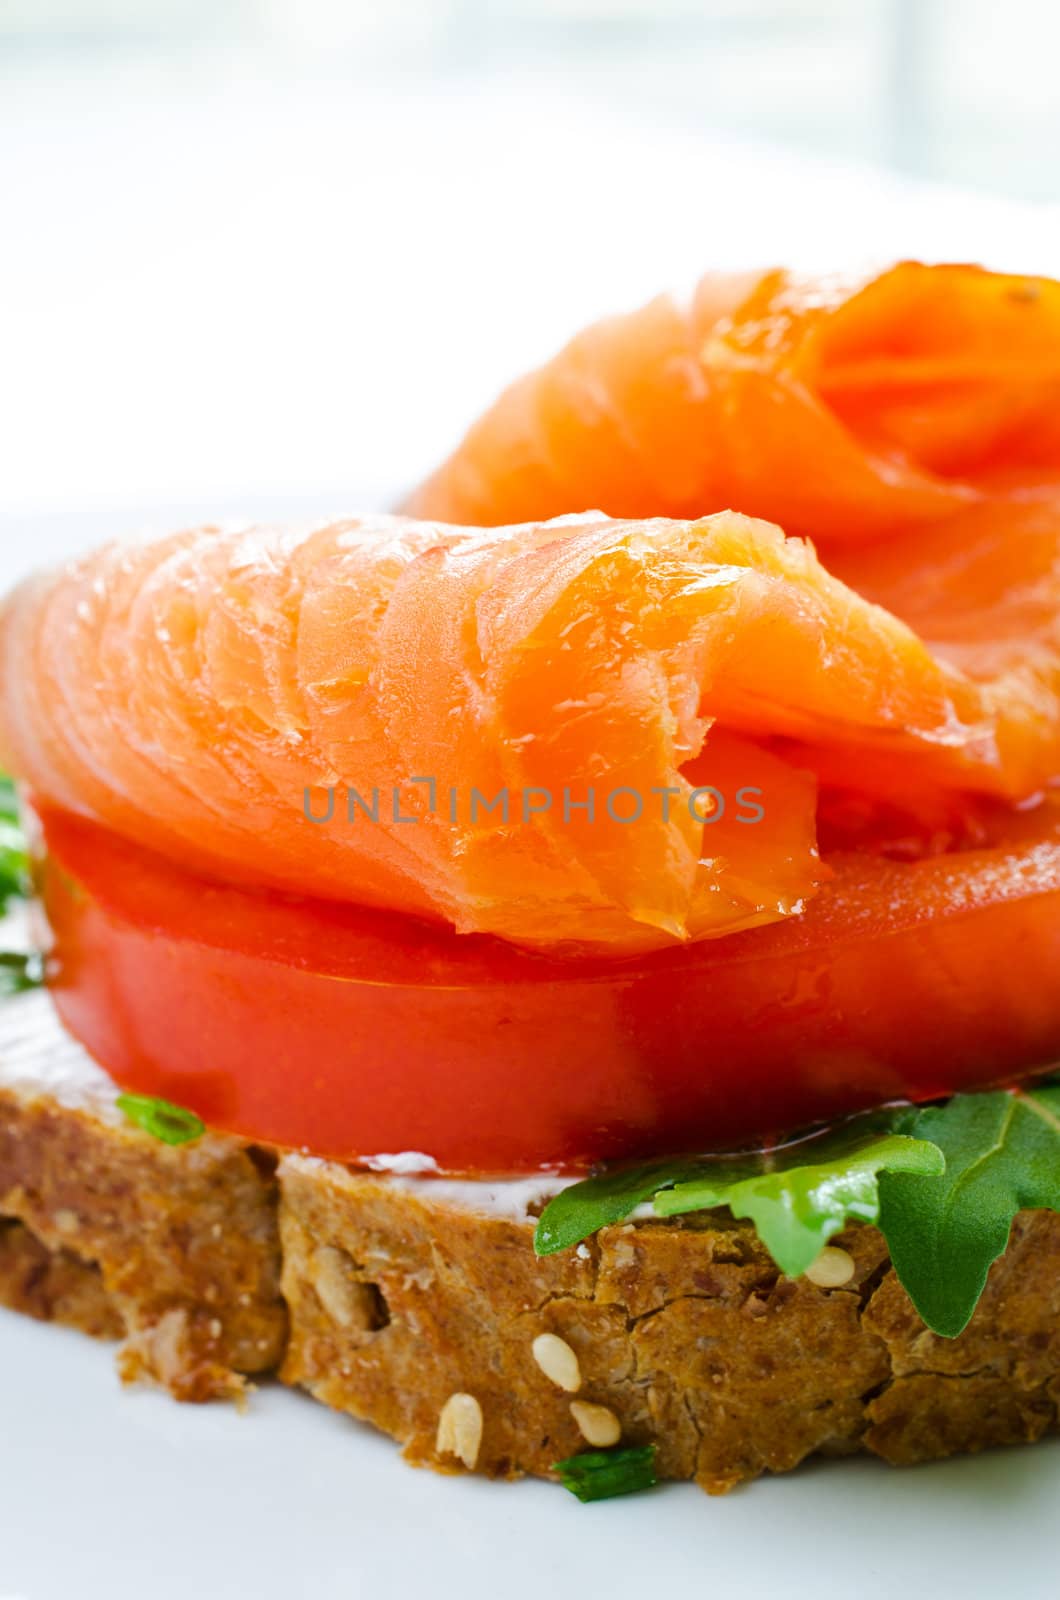 Smoked salmon sandwich with tomato and rye bread by Nanisimova